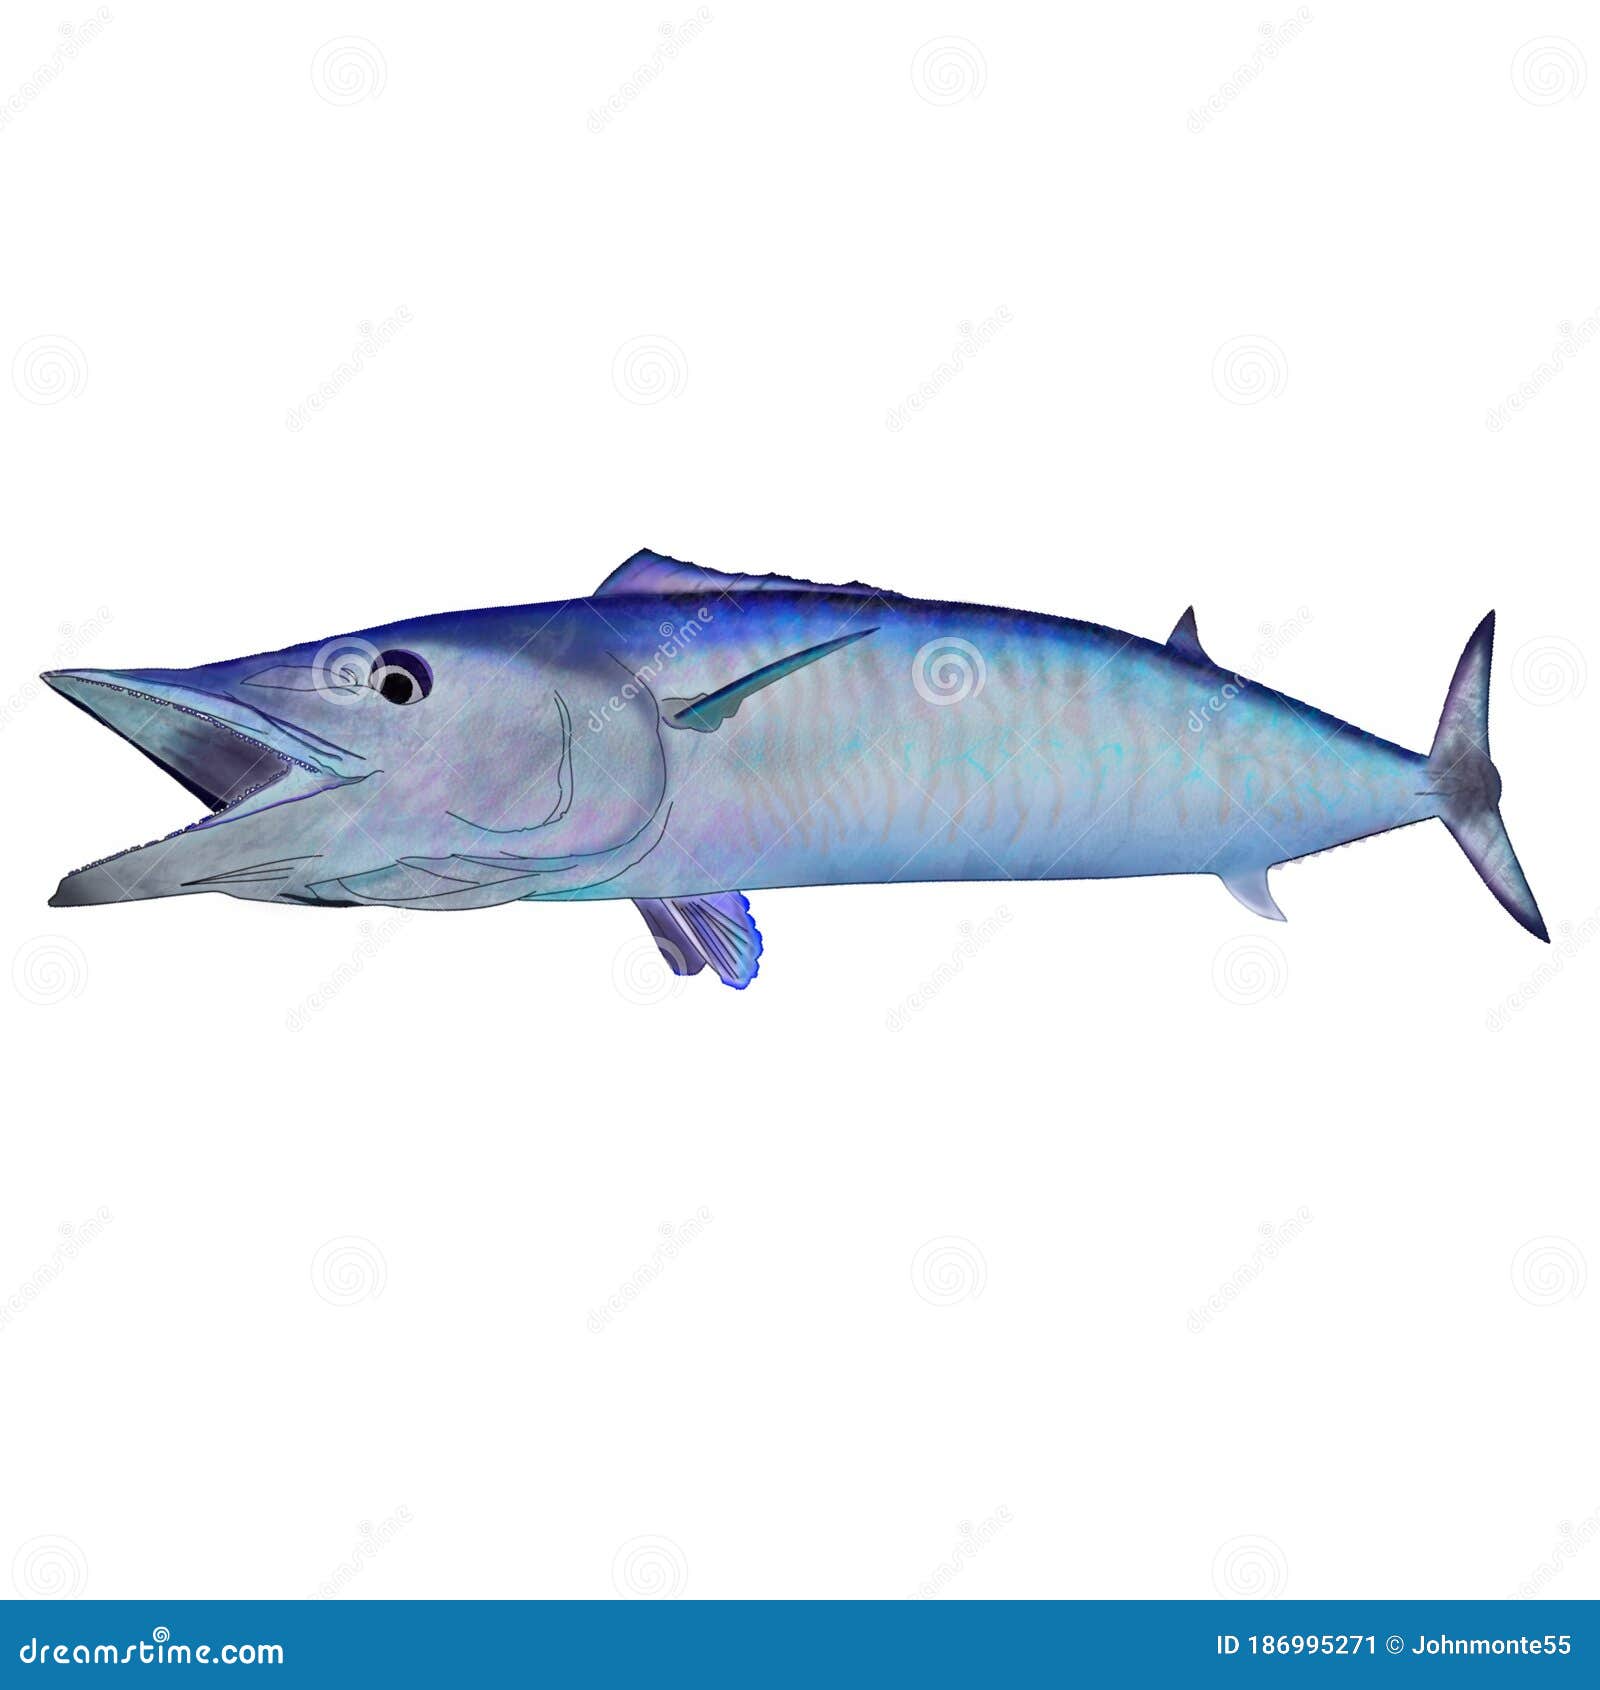 wahoo fish flavor profile